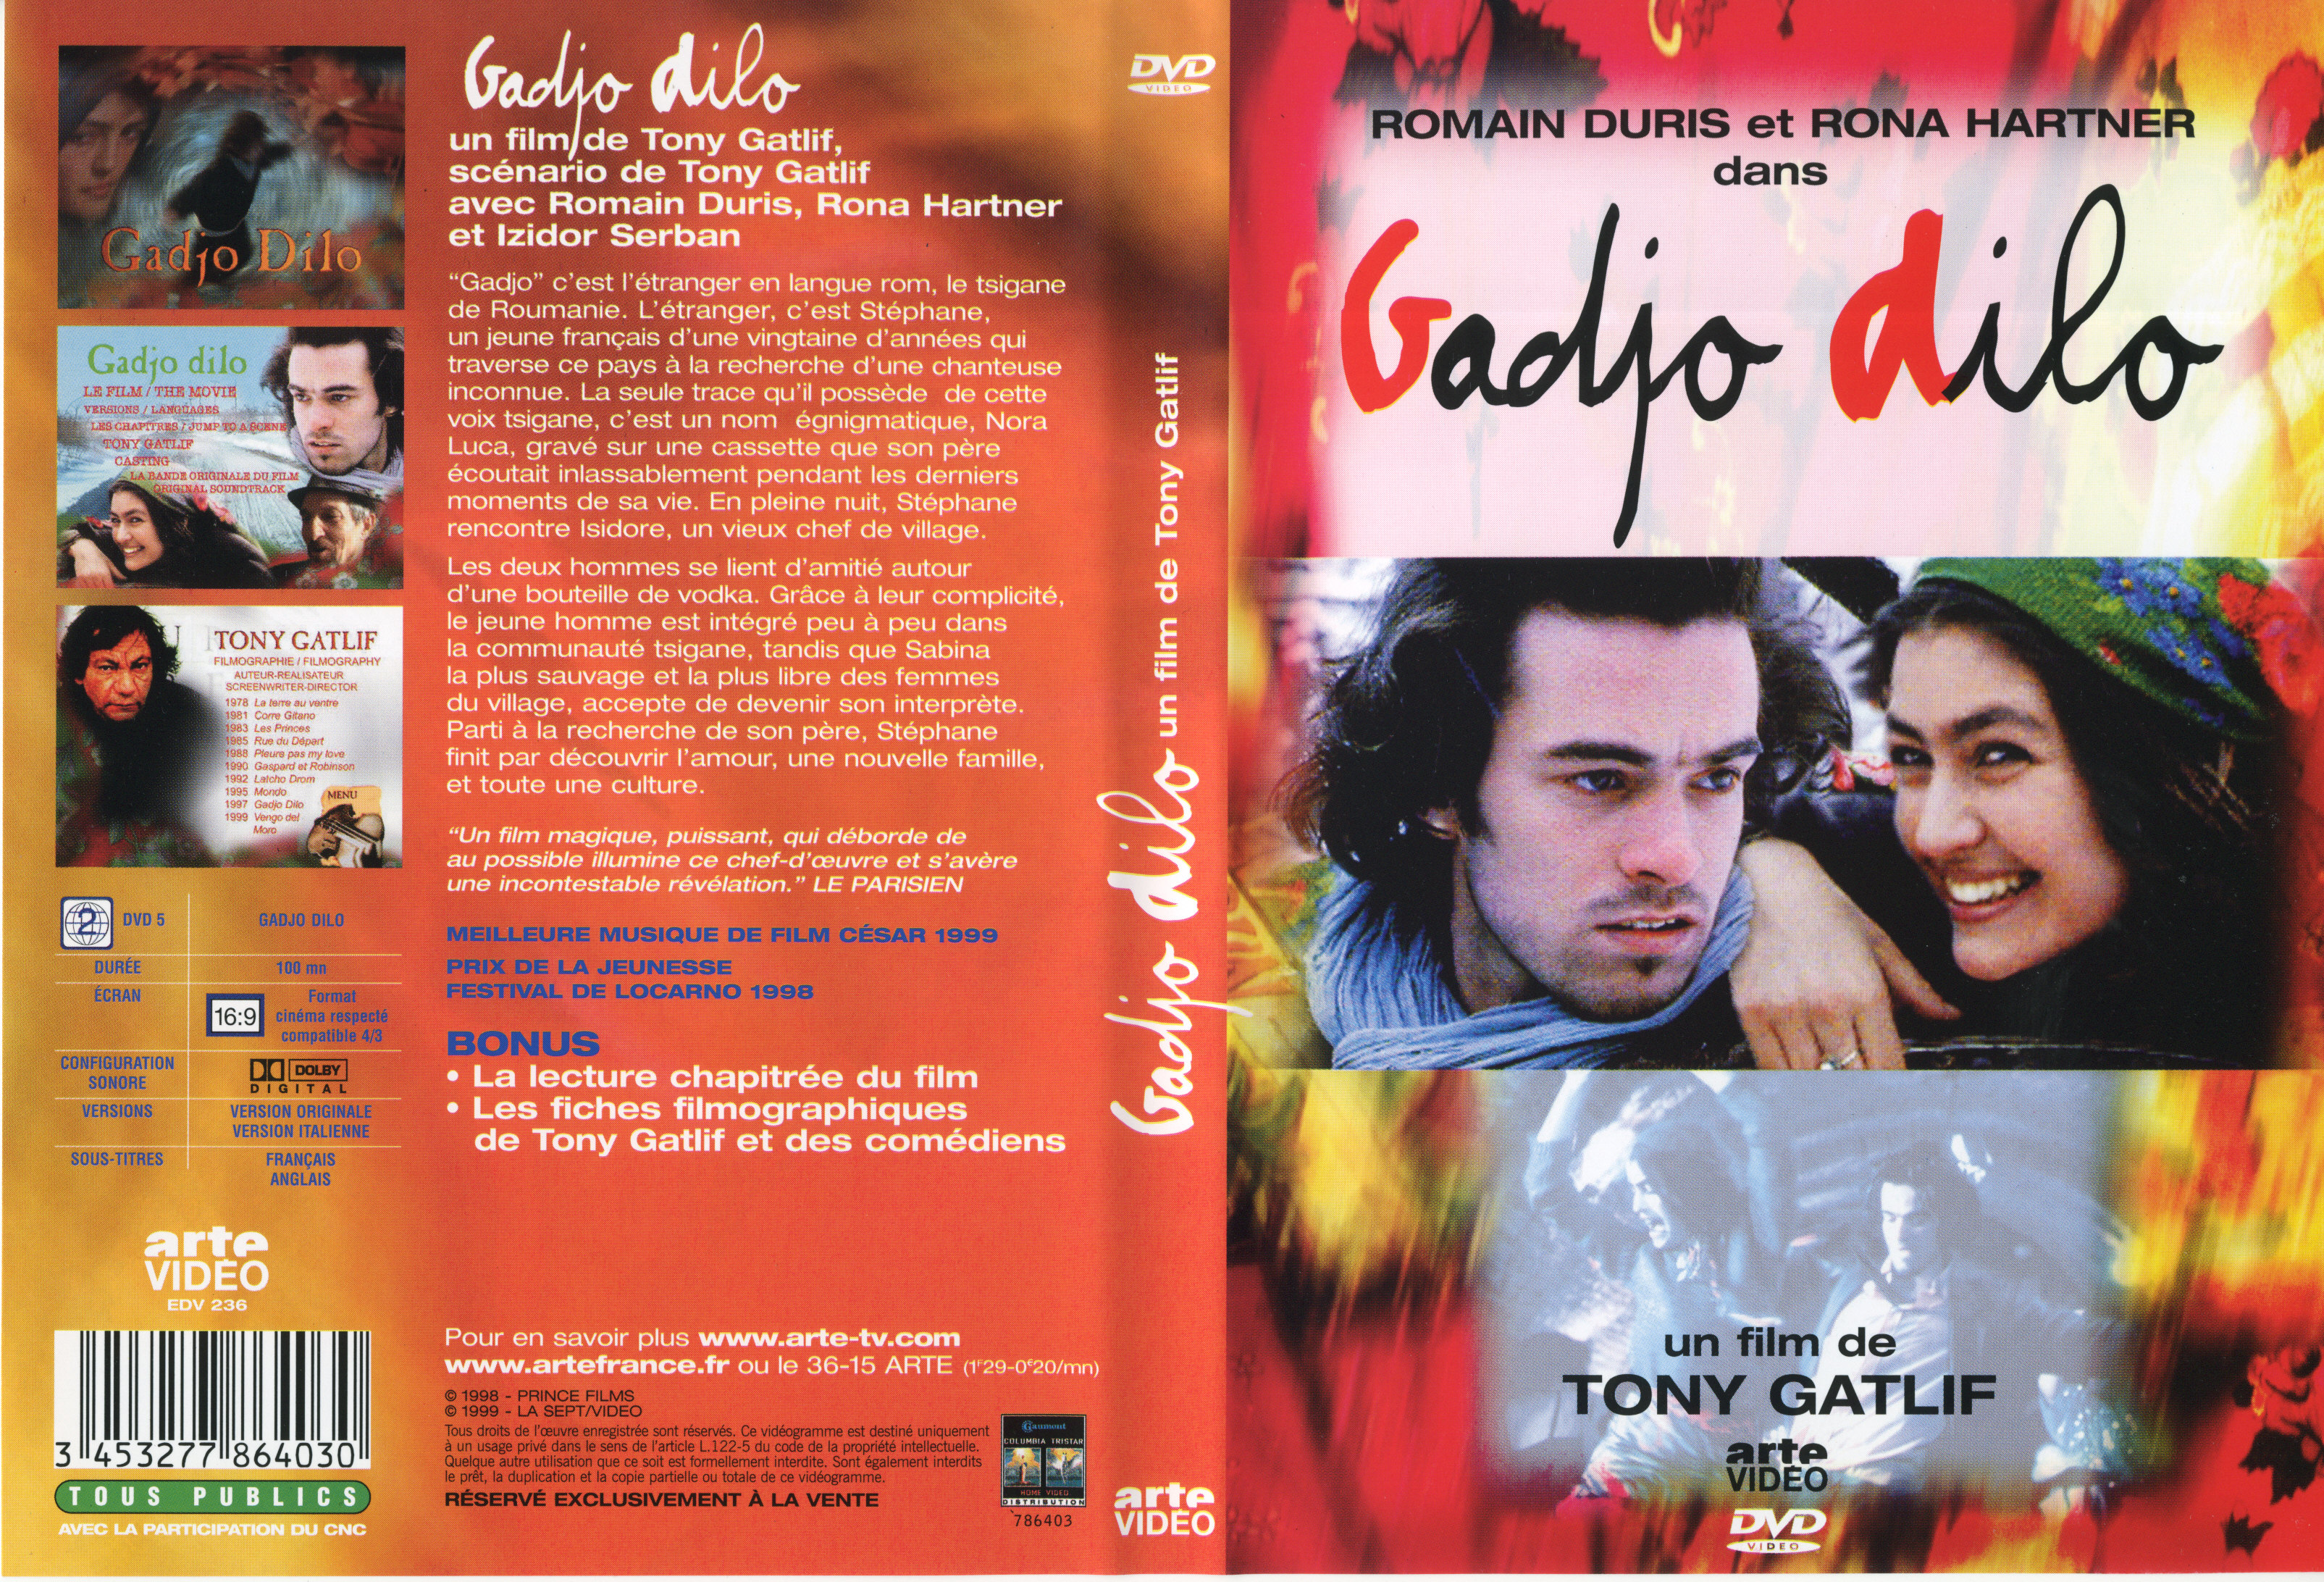 Jaquette DVD Gadjo Dilo